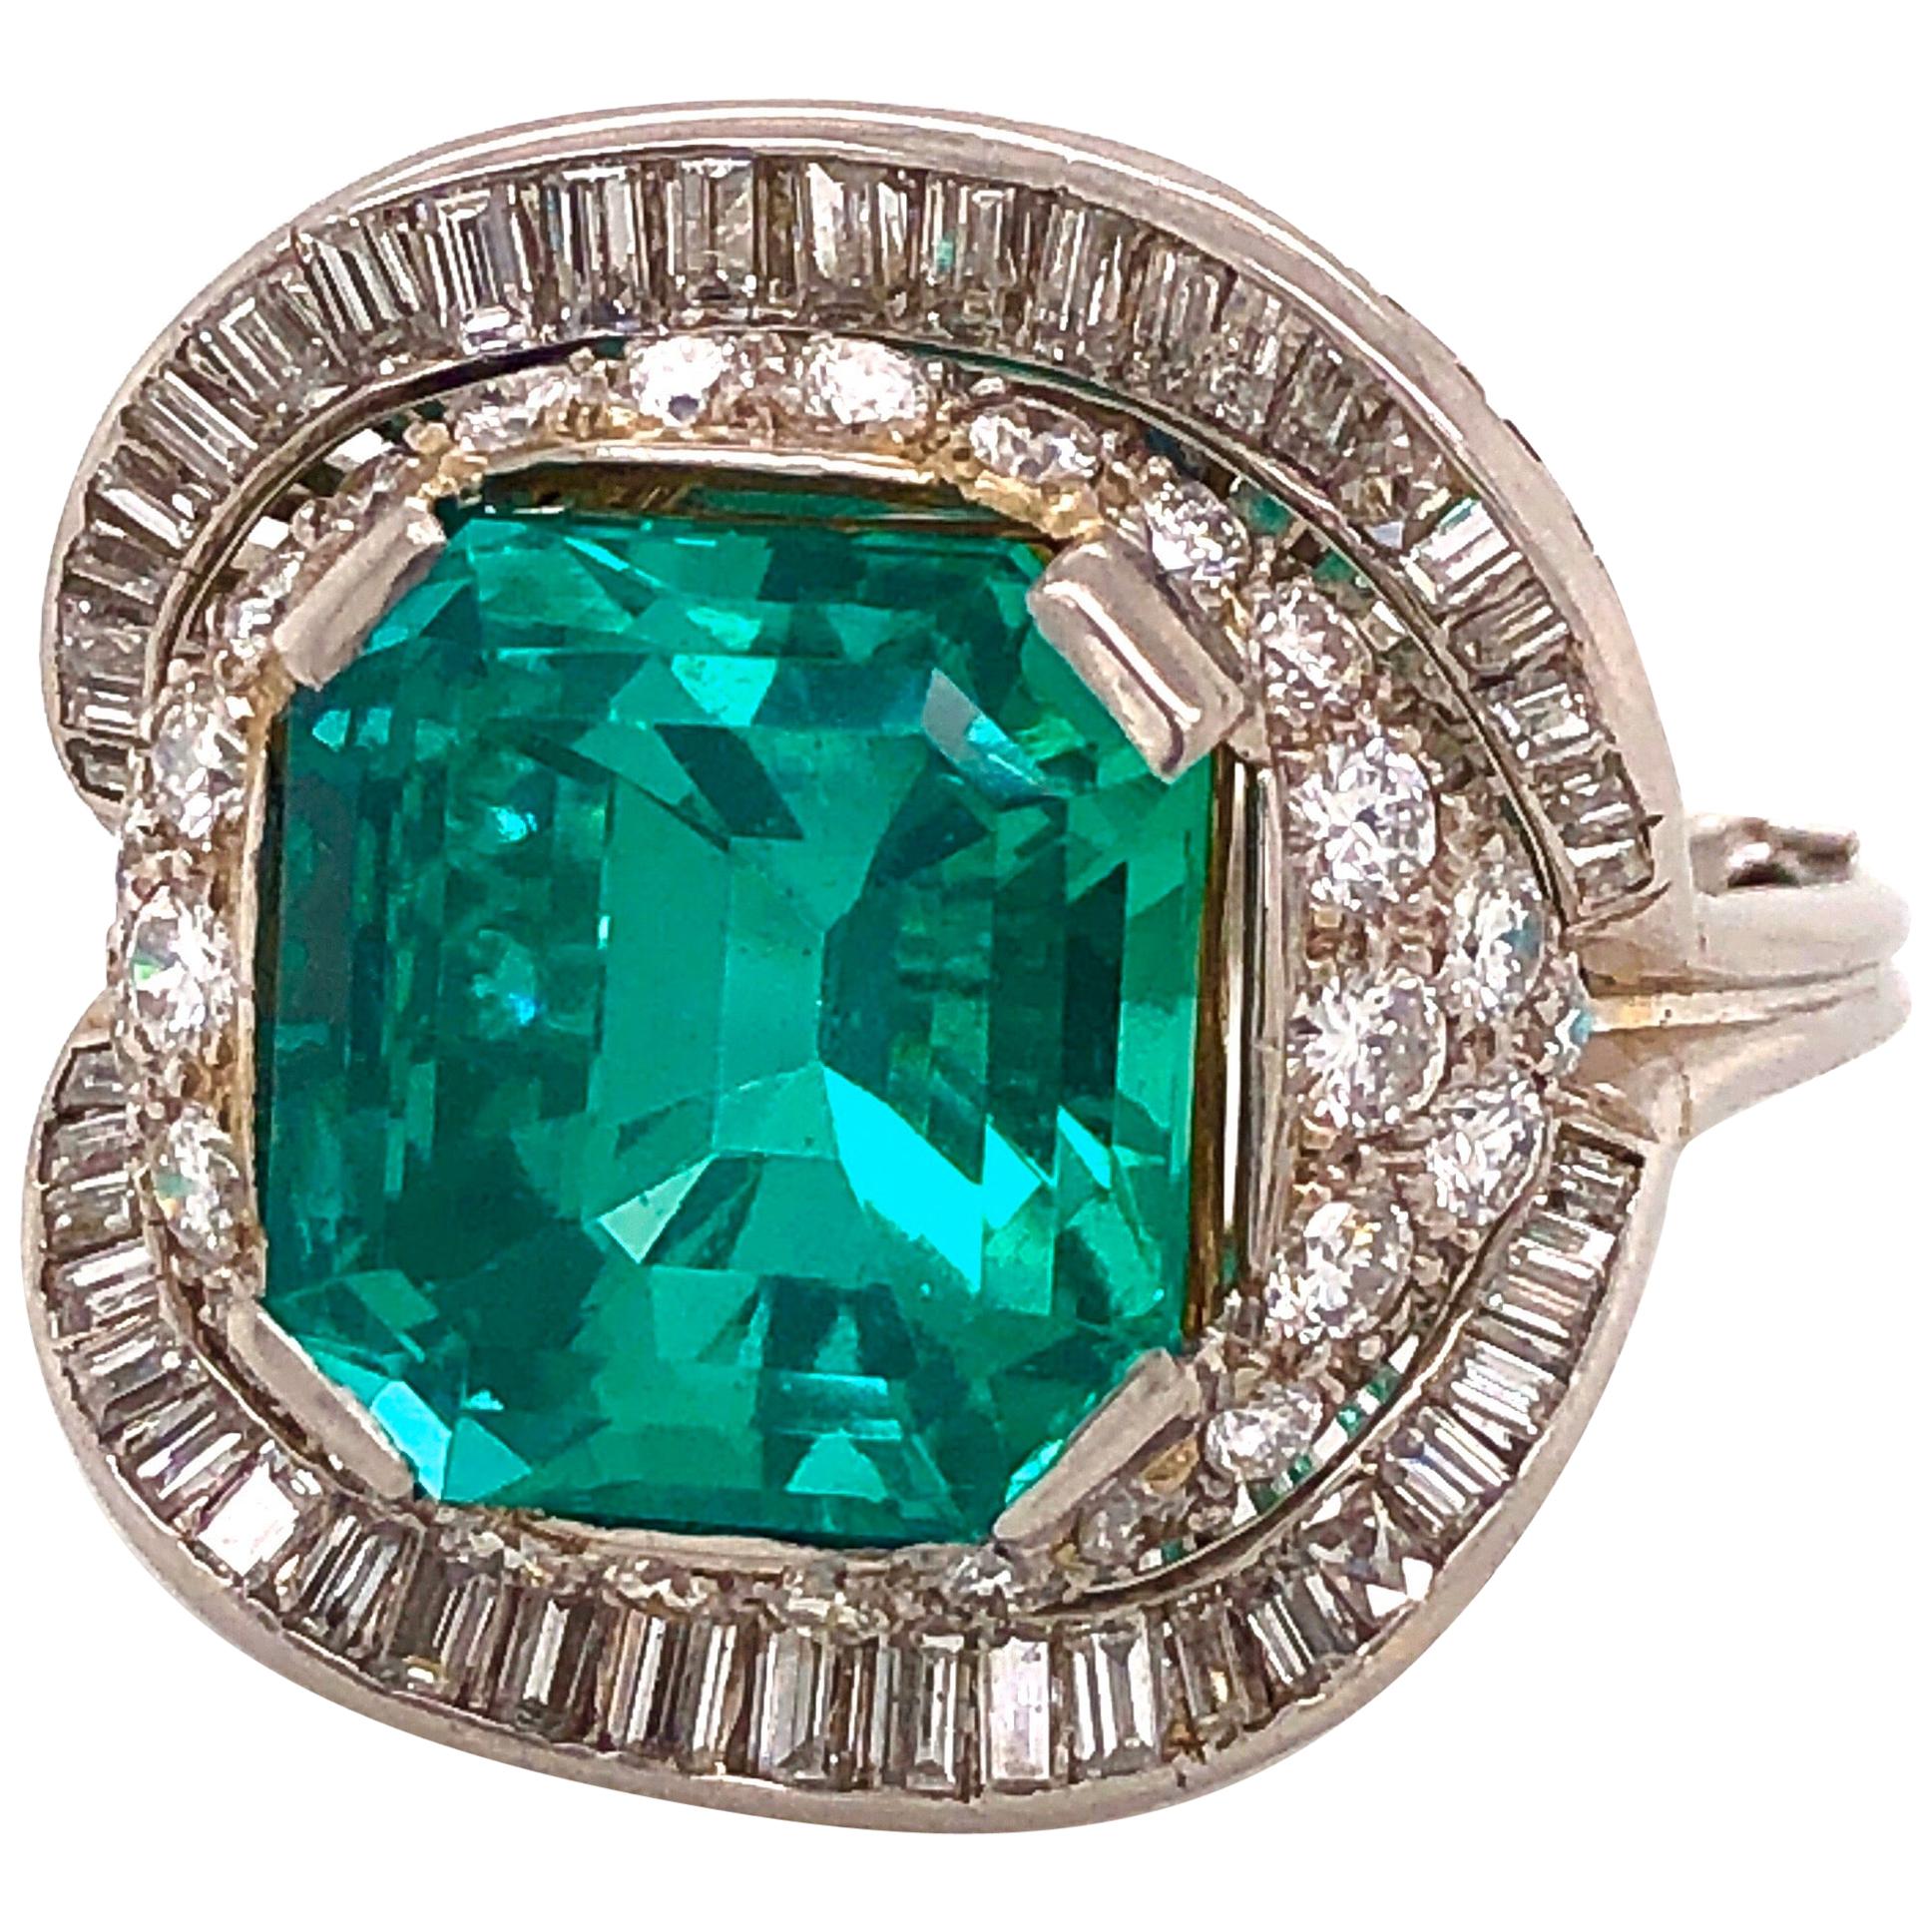 Emilio Jewelry Certified 9.08 Carat Muzo No Oil Colombian Emerald Ring